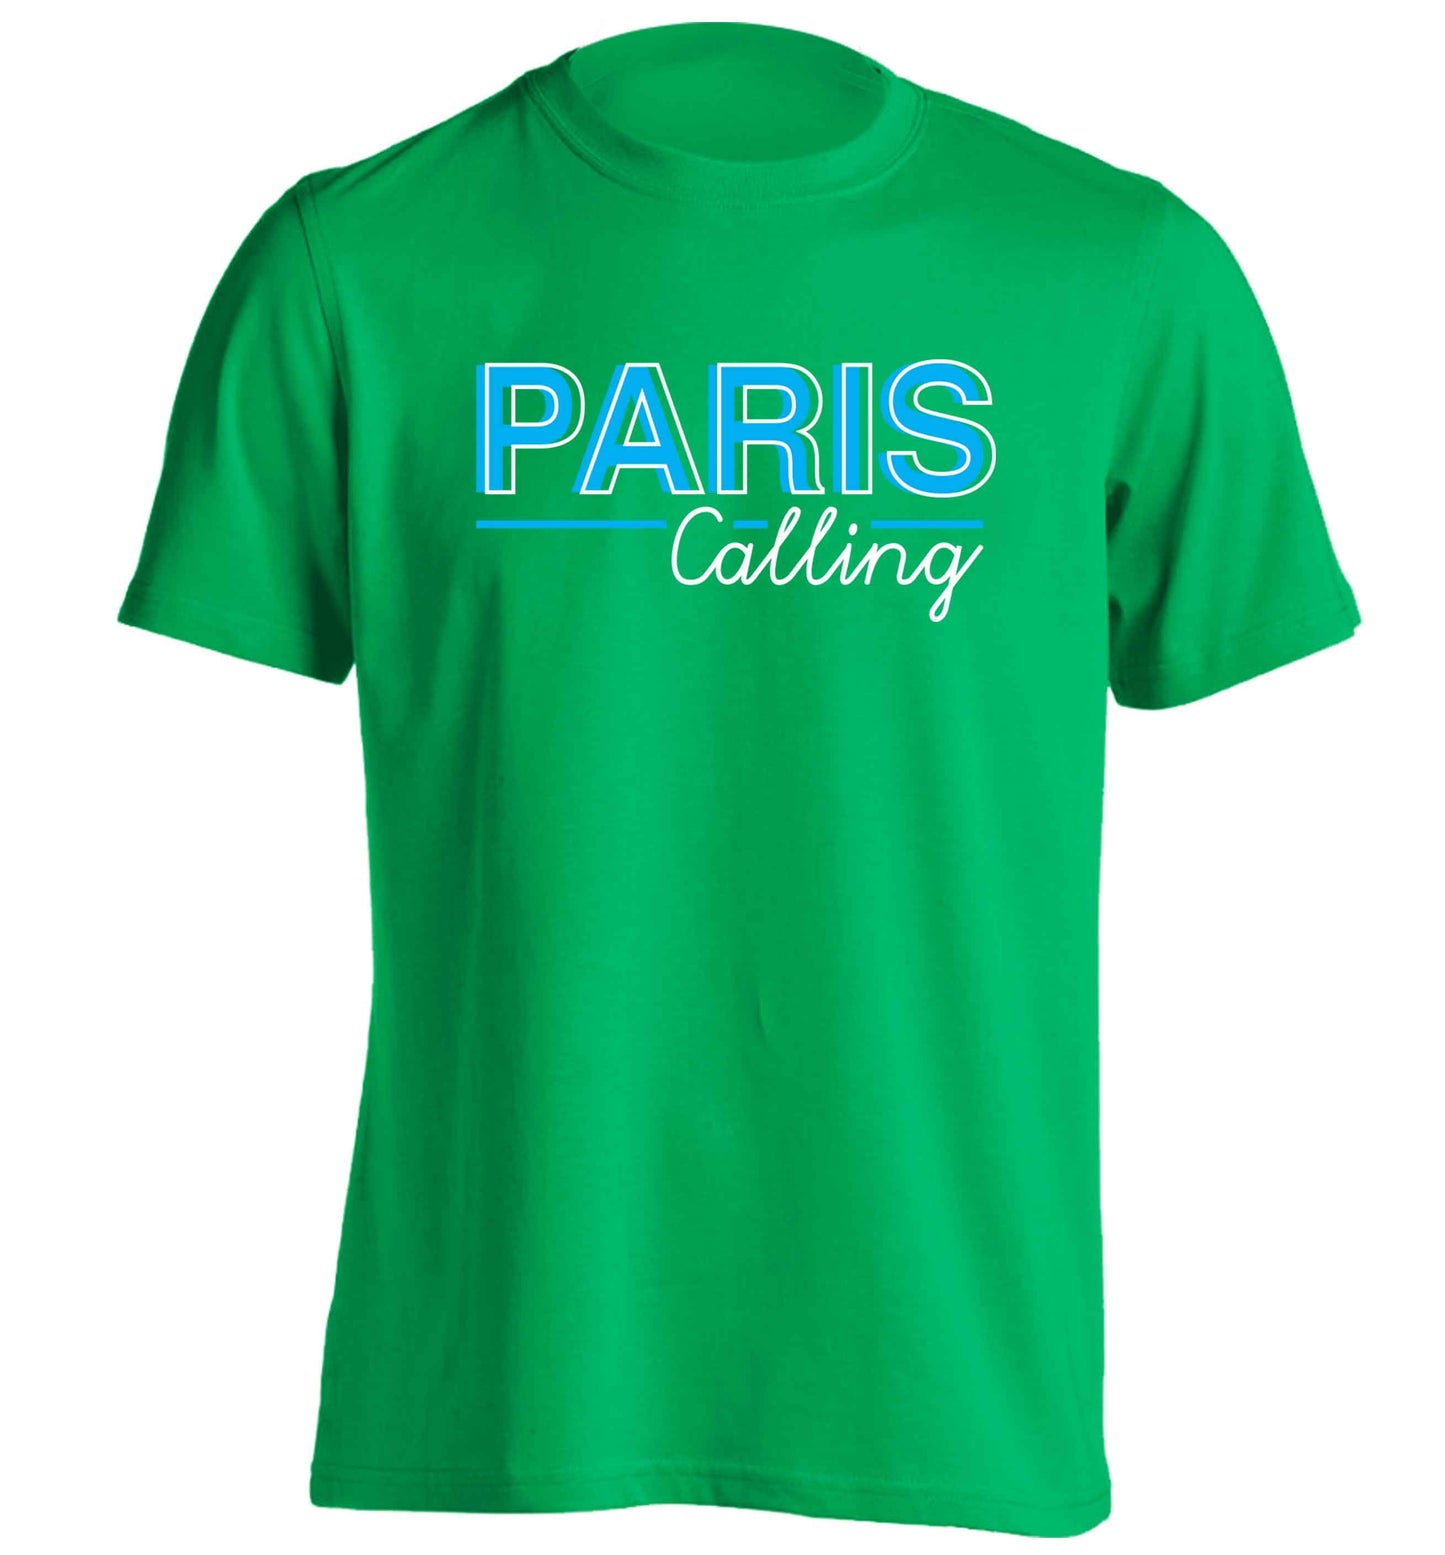 Paris calling adults unisex green Tshirt 2XL